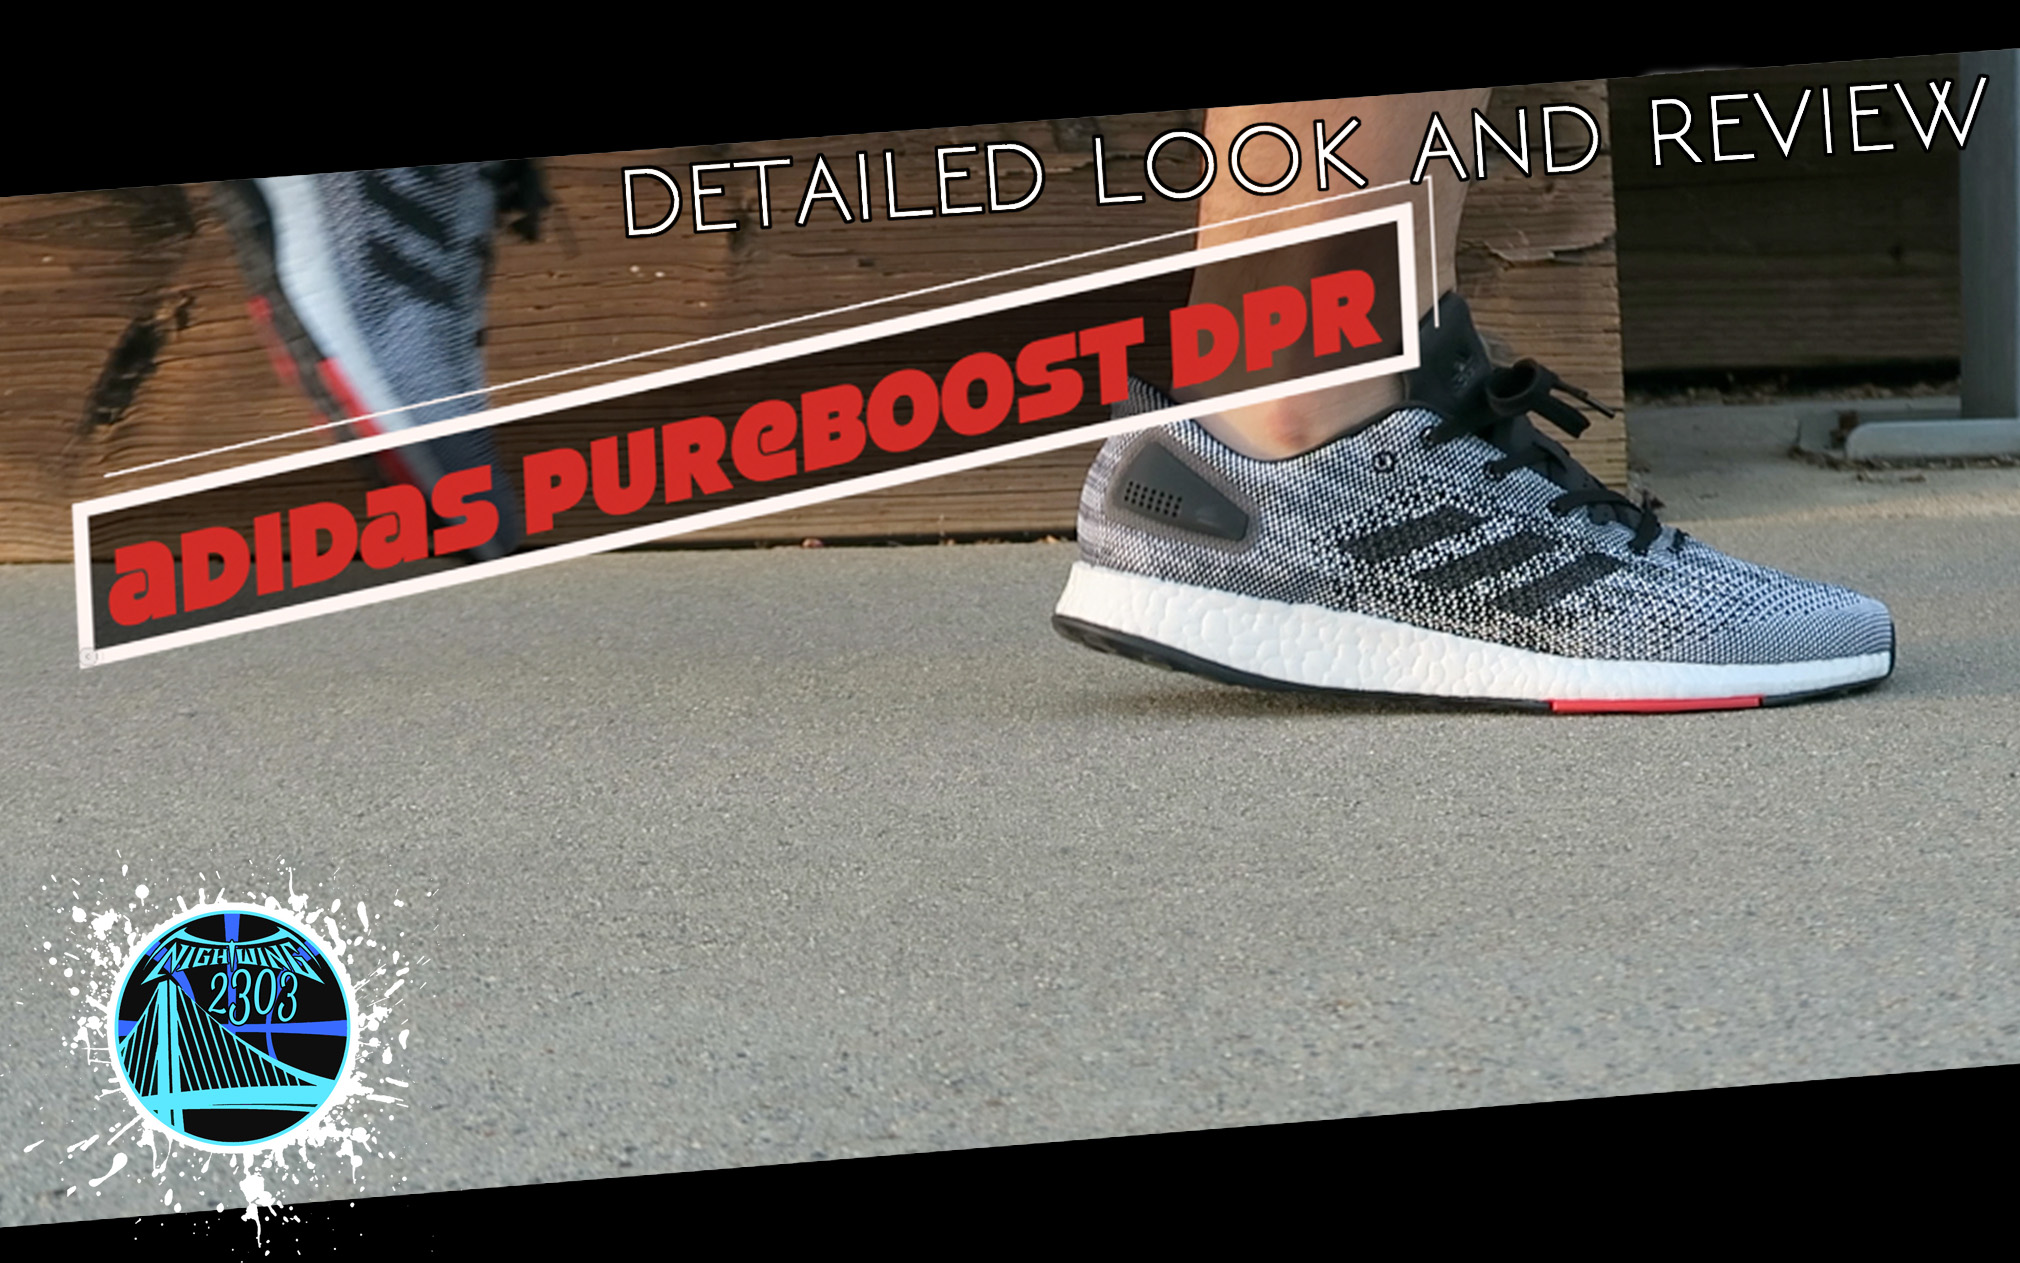 Bonus Dhr bezoeker adidas PureBoost DPR | Detailed Look and Performance Review - WearTesters